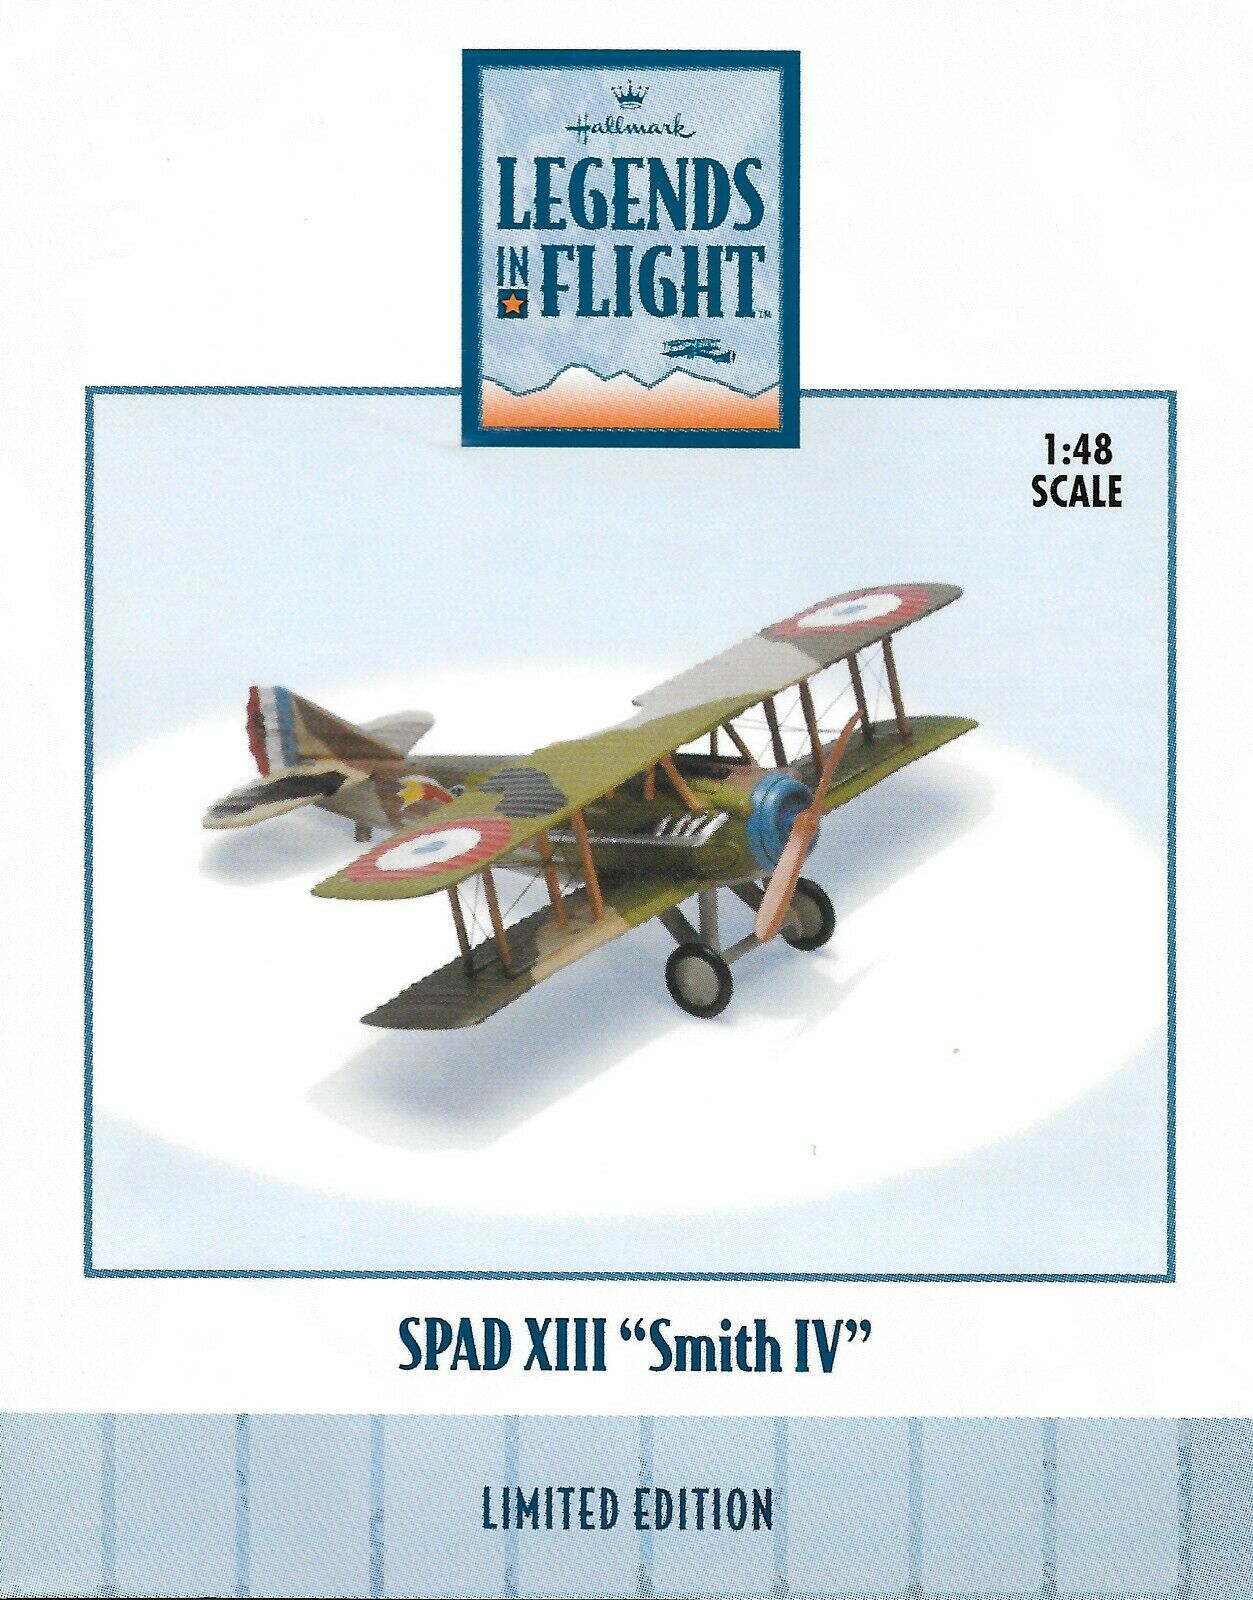 *1/48 SPAD XIII "Smith IV" Hallmark Legends in Flight QHA1003